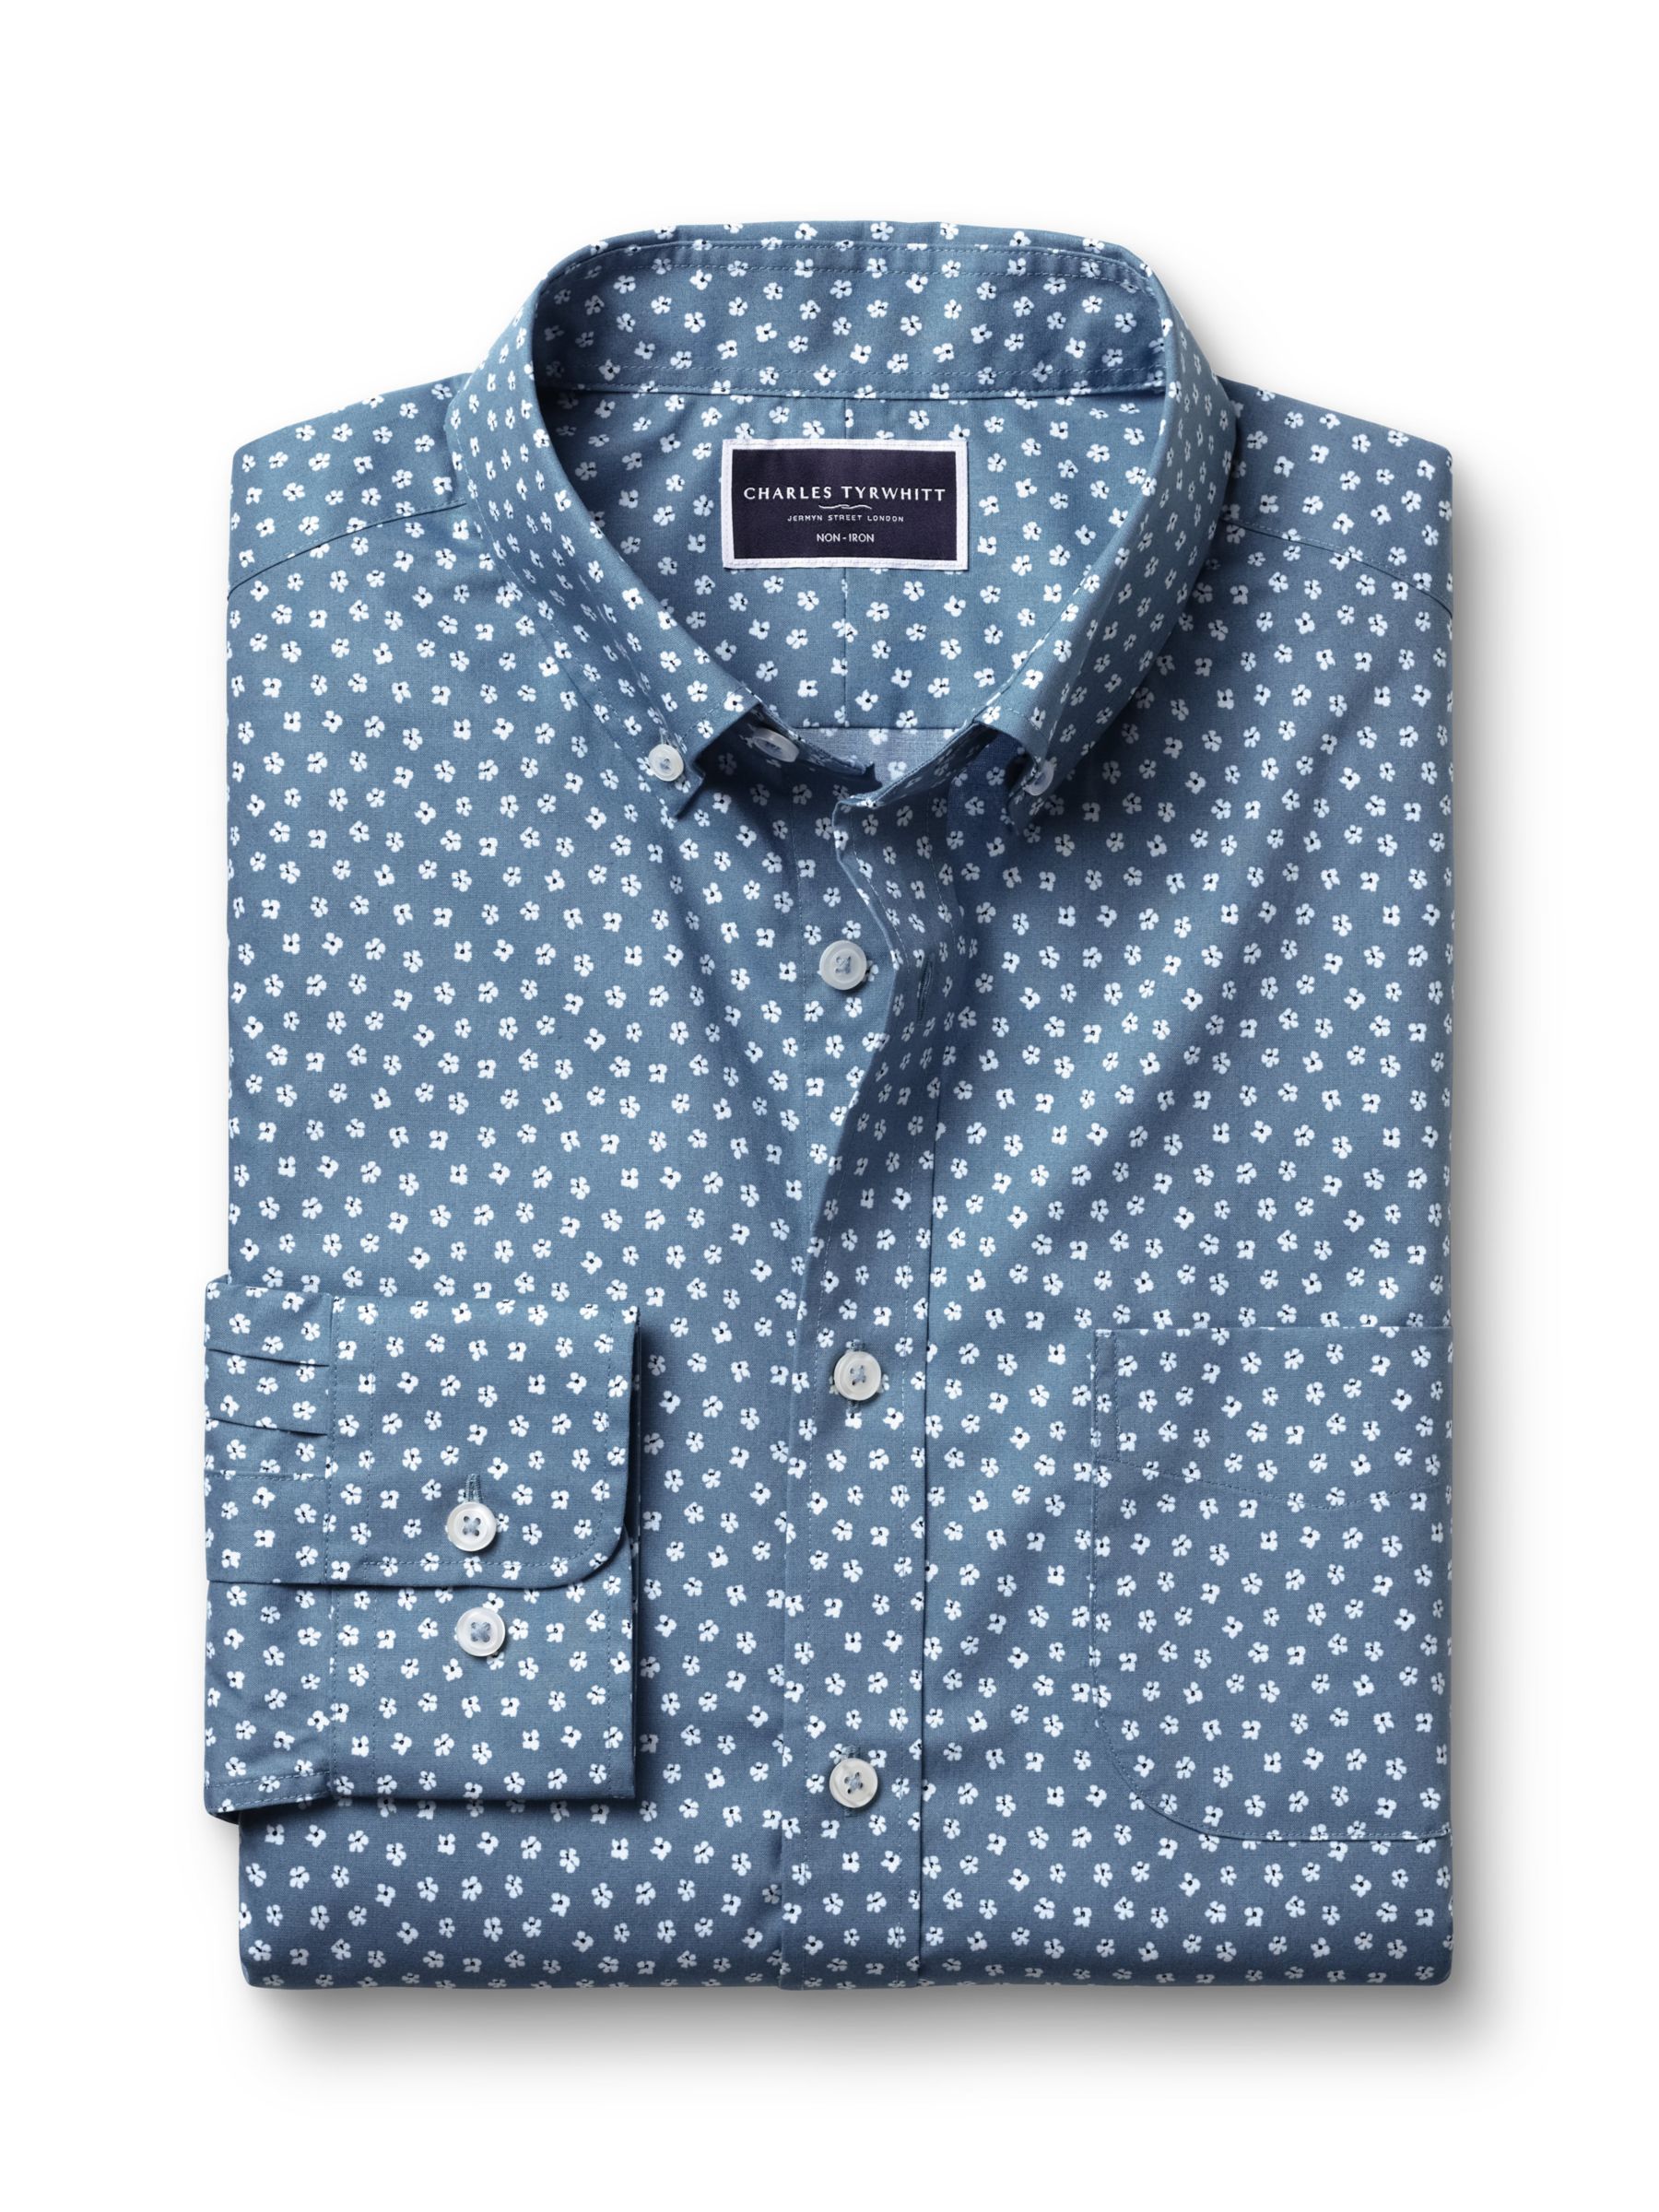 Charles Tyrwhitt Floral Print Non-Iron Slim Fit Shirt, Mid Blue/White, L